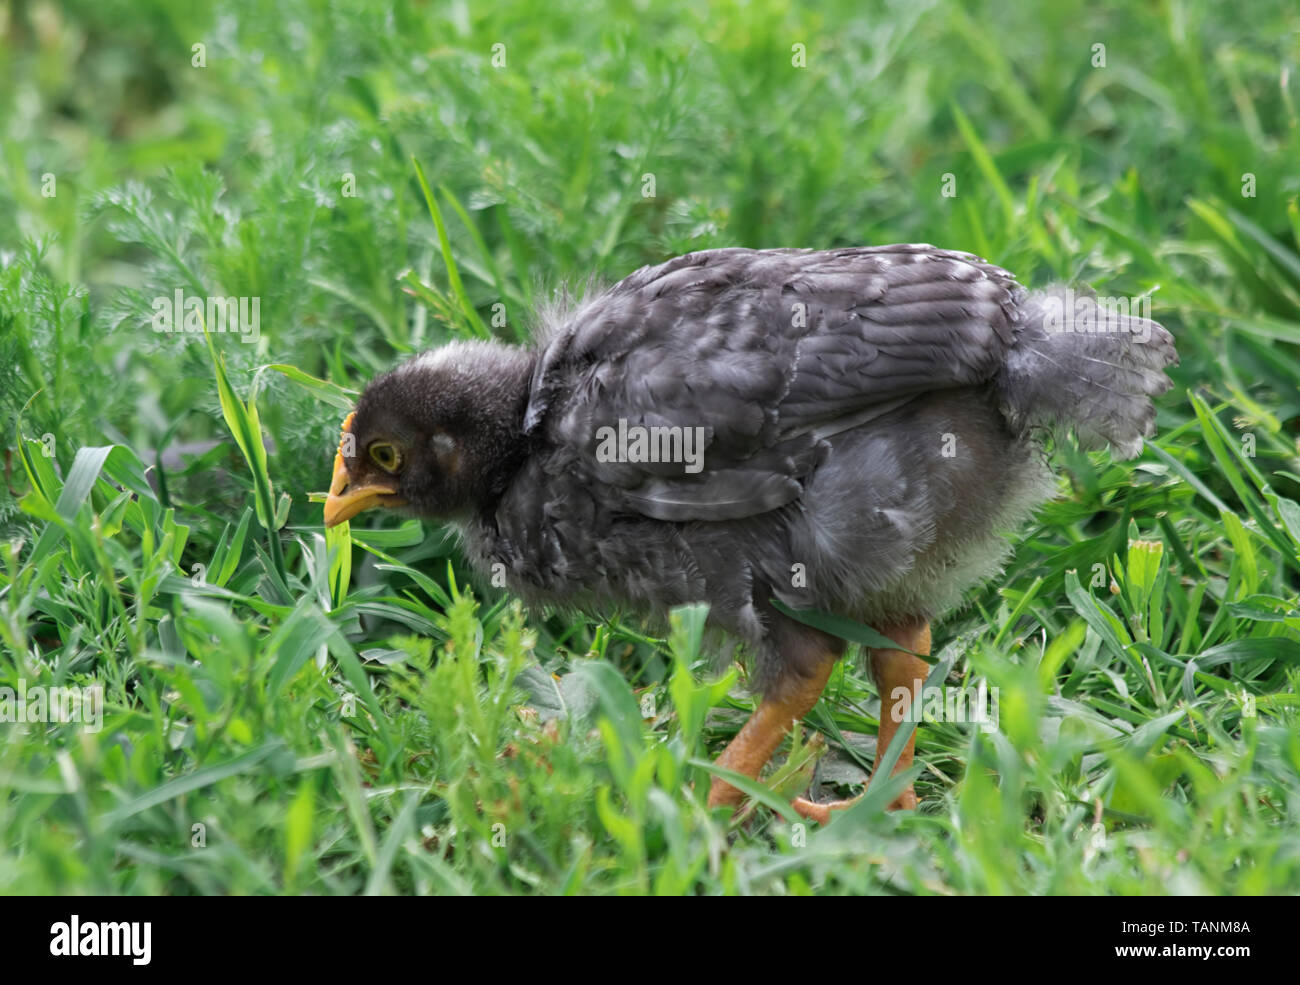 A cute little chick on green grass Stock Photo